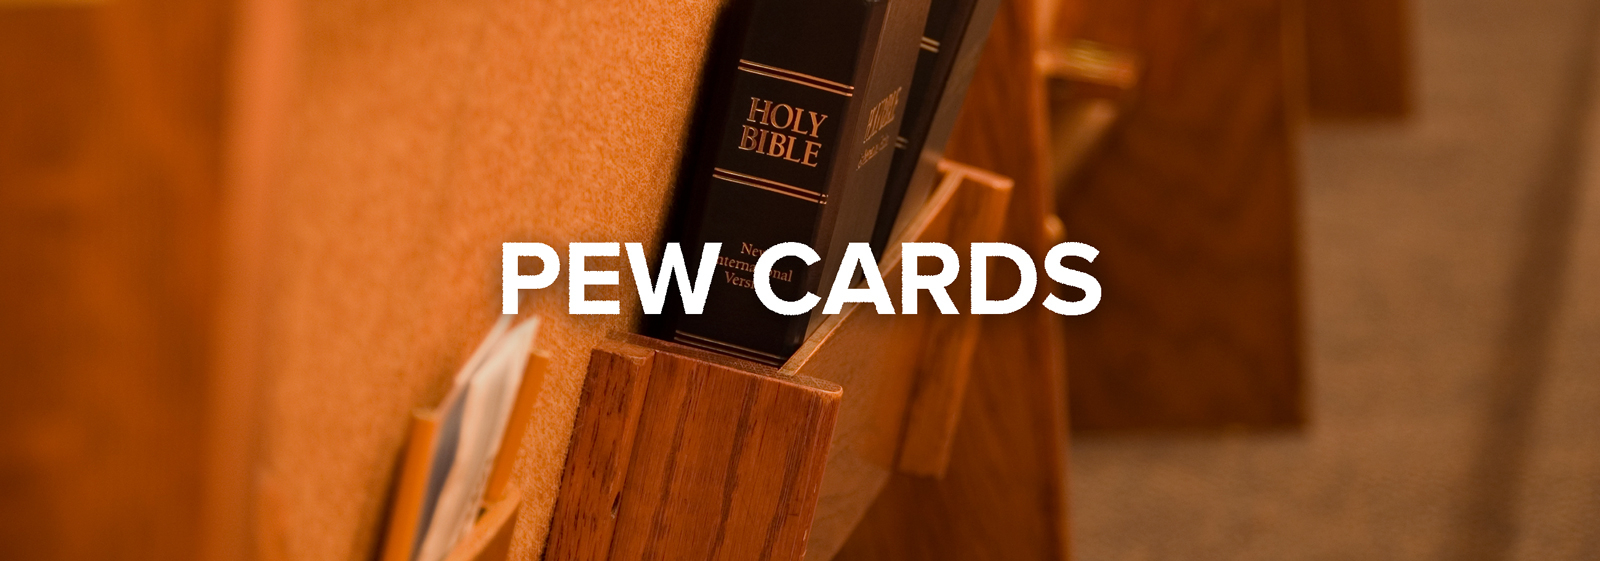 church-pew-cards-hermitage-art